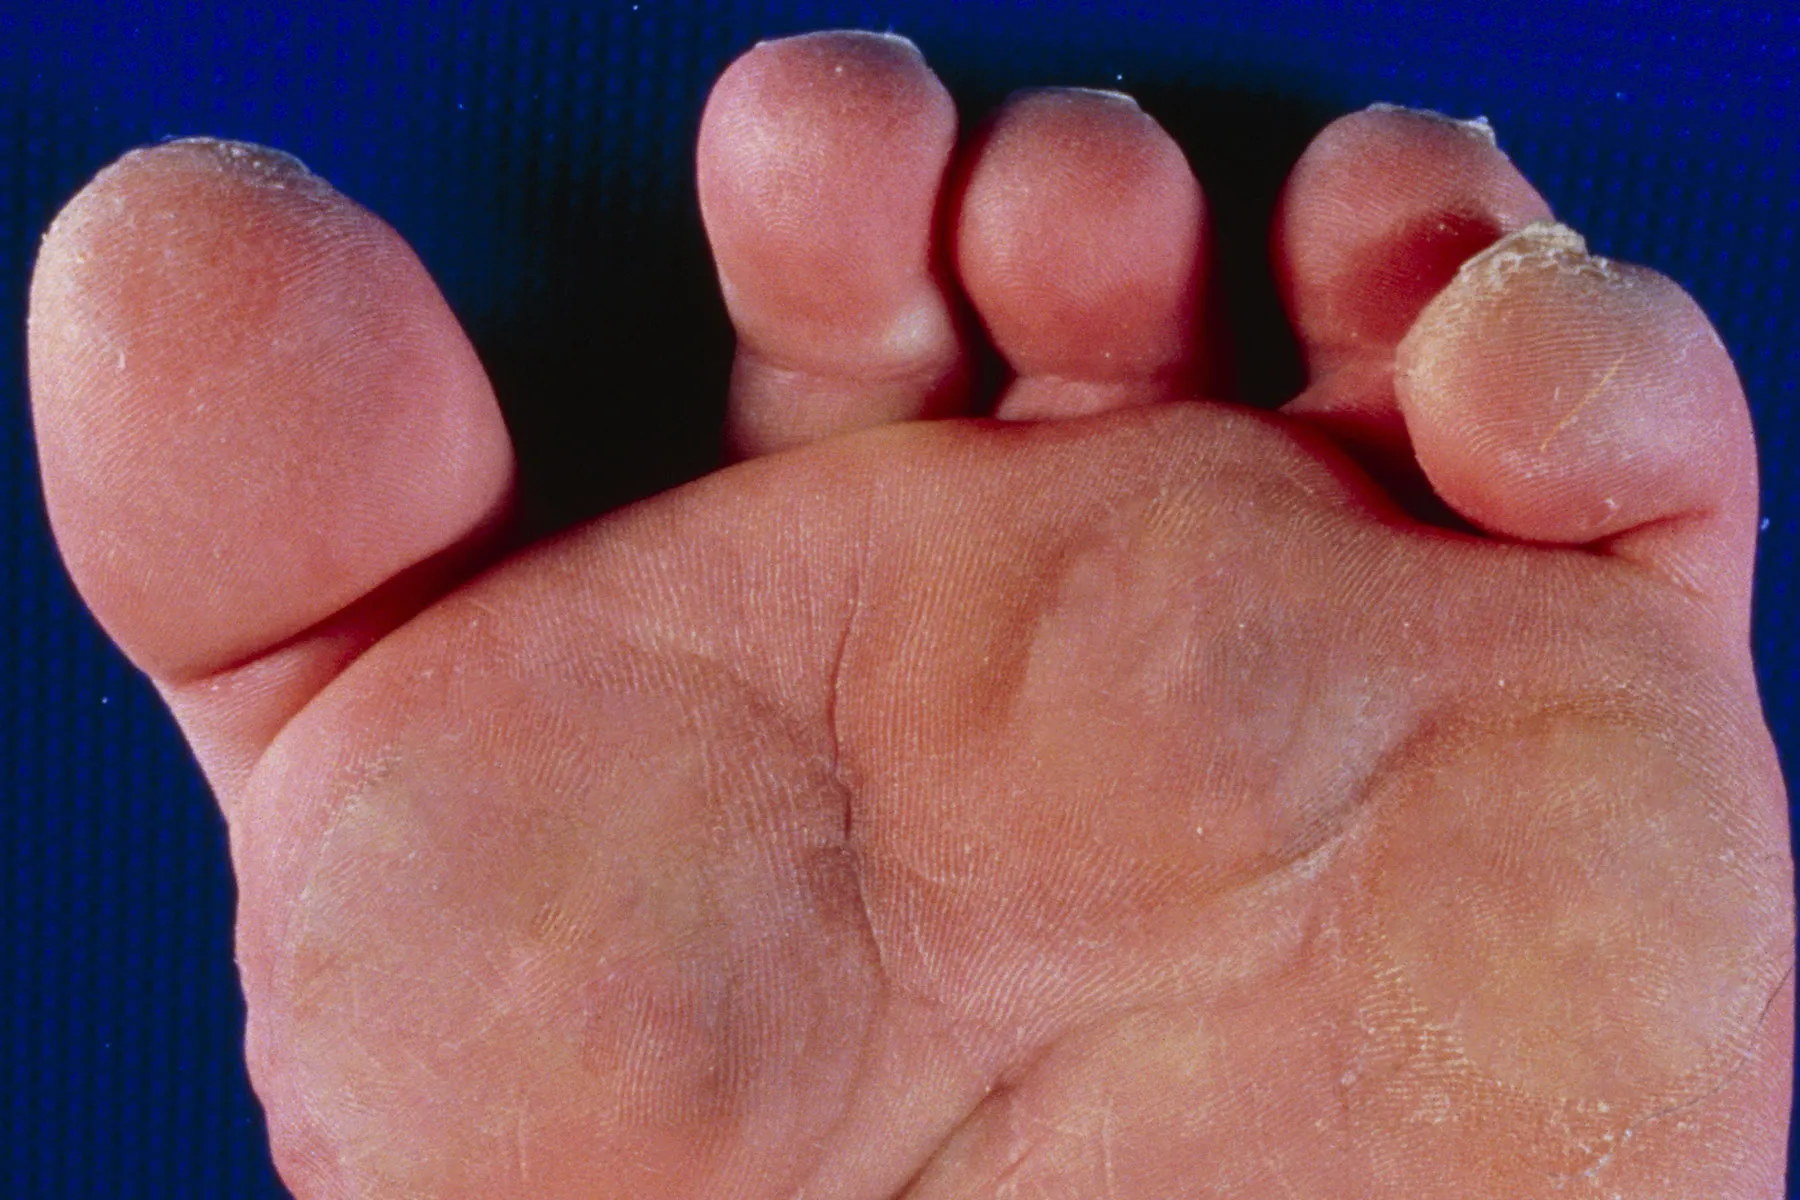 cracked skin under pinky toe